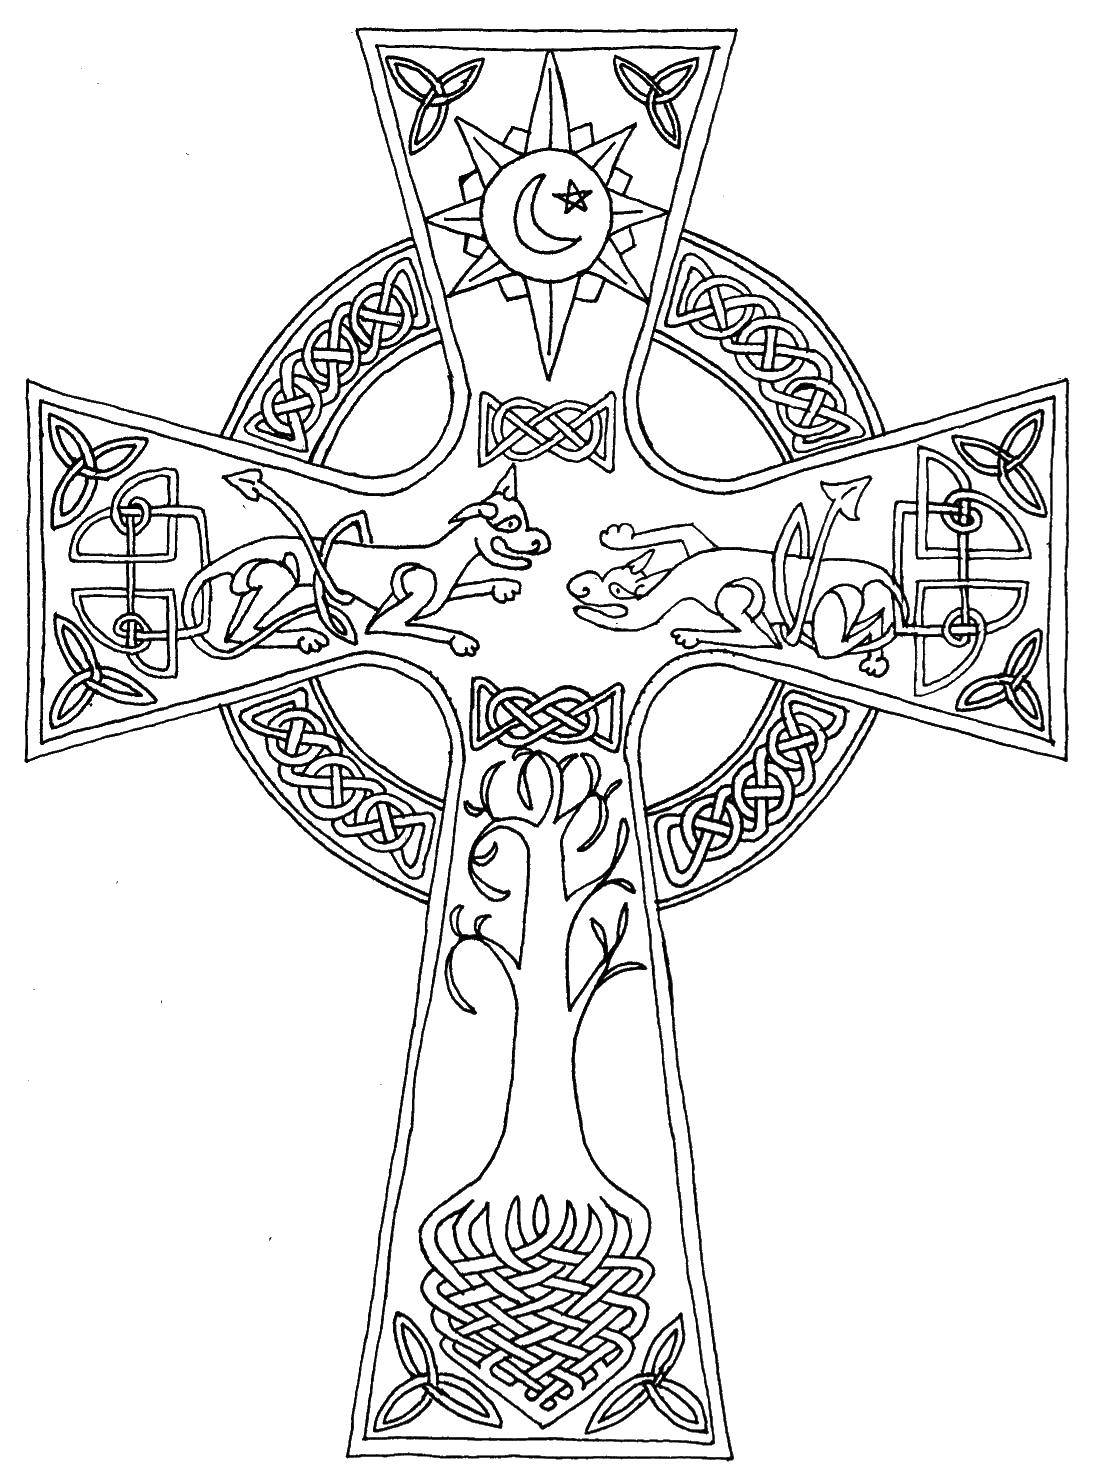 Название: Раскраска Крест с изображениями. Категория: Крест. Теги: крест, религия.